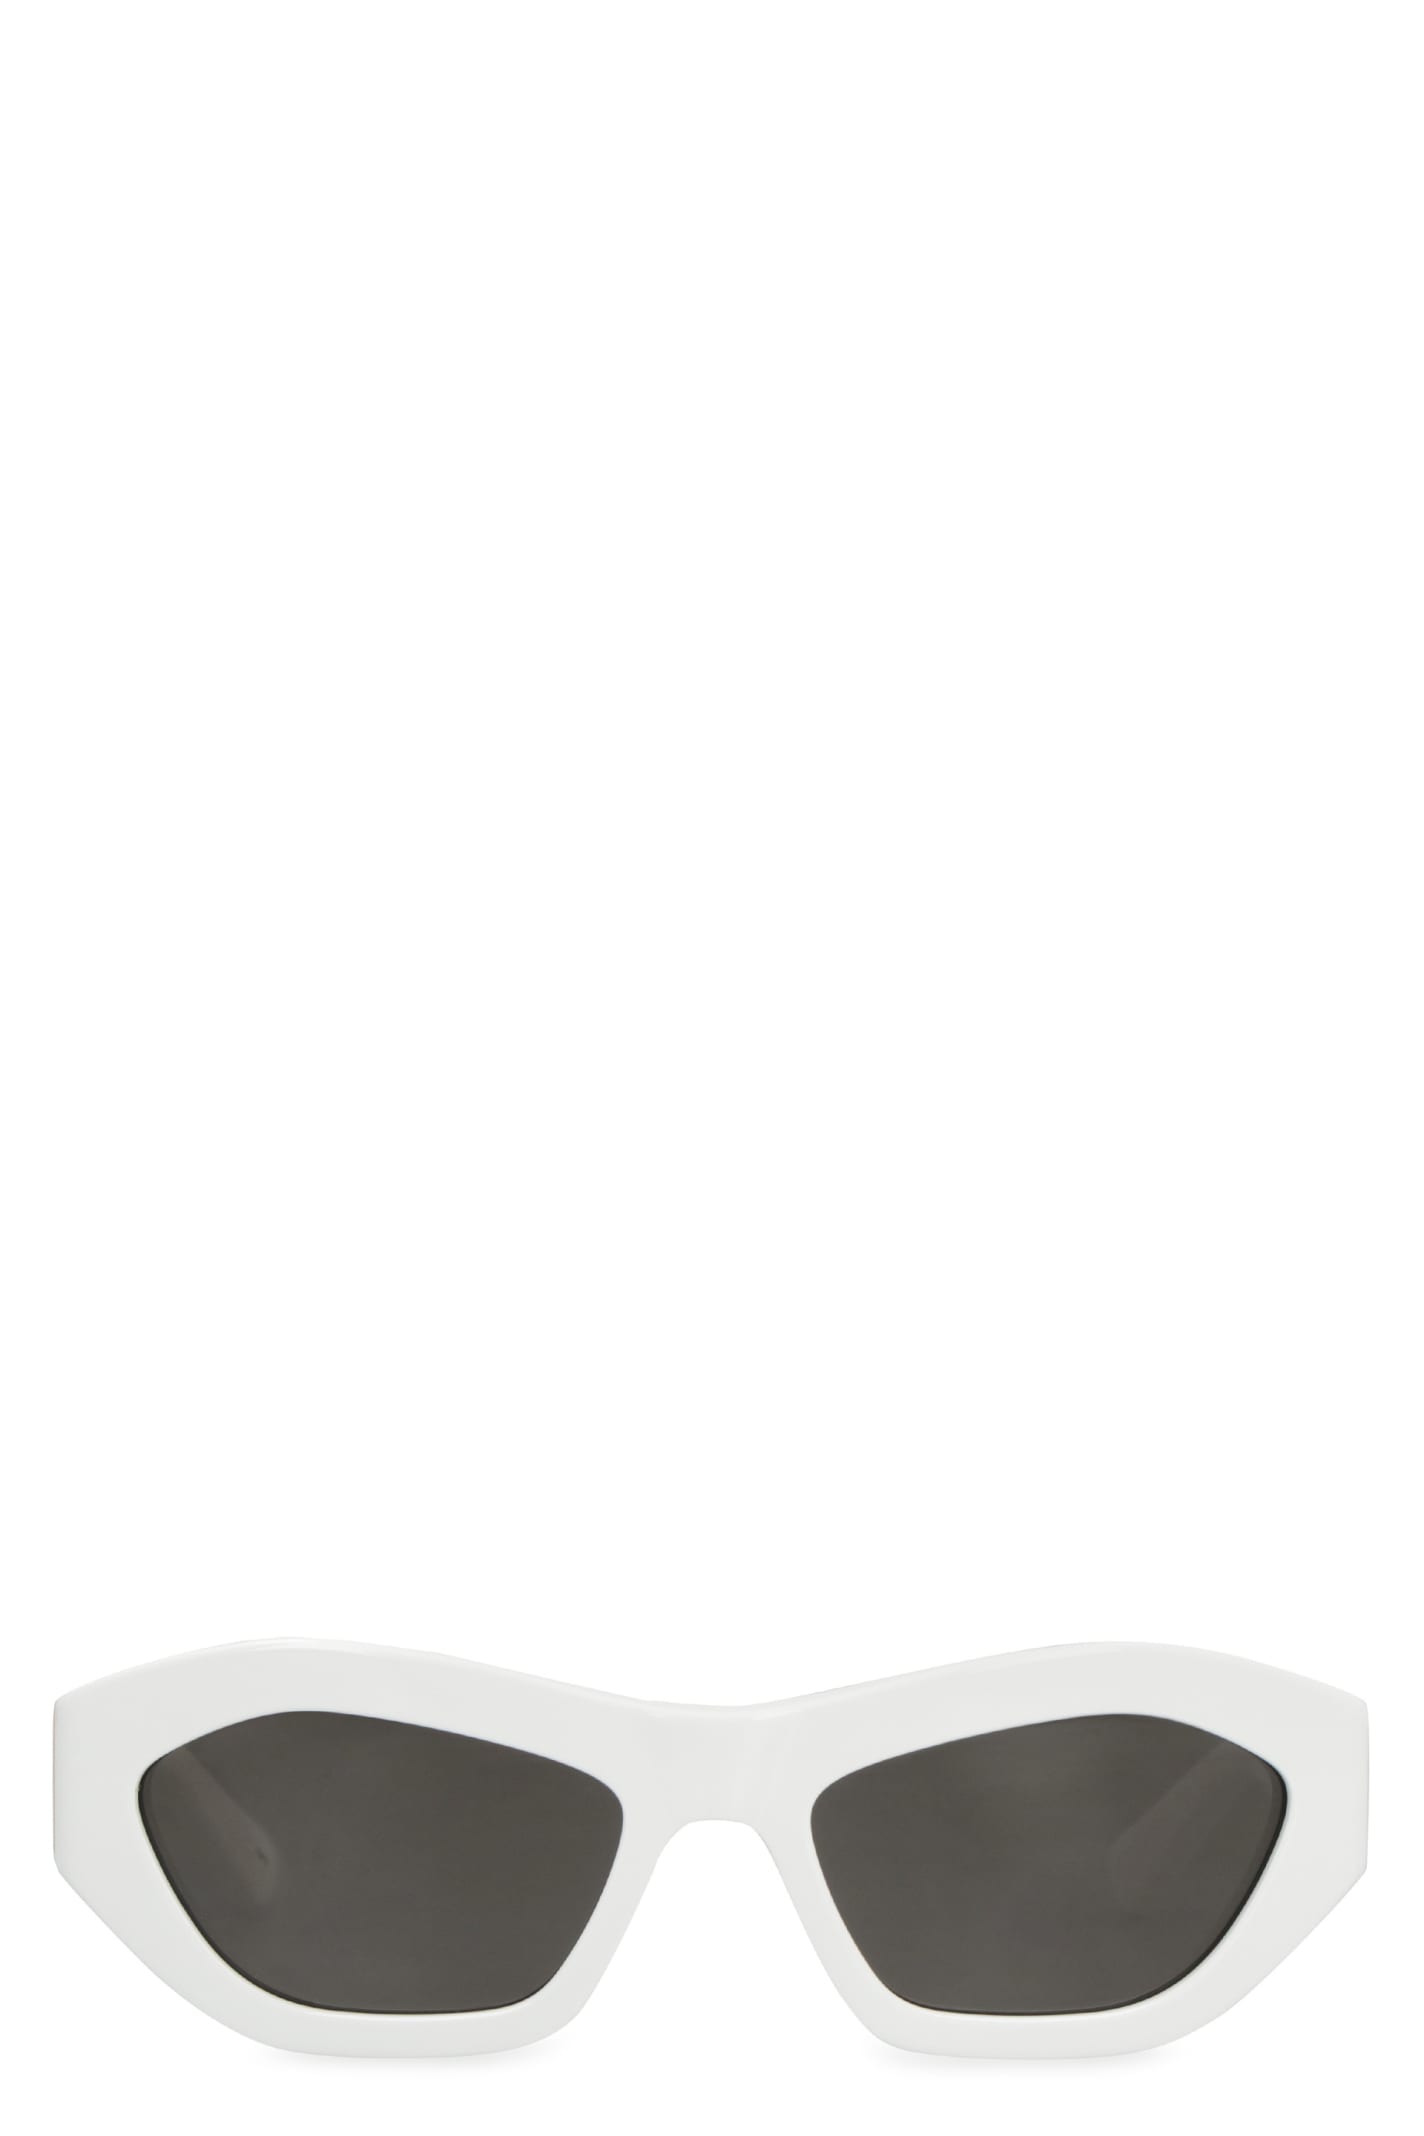 Bottega Veneta Eyewear Hexagonal Sunglasses Angle